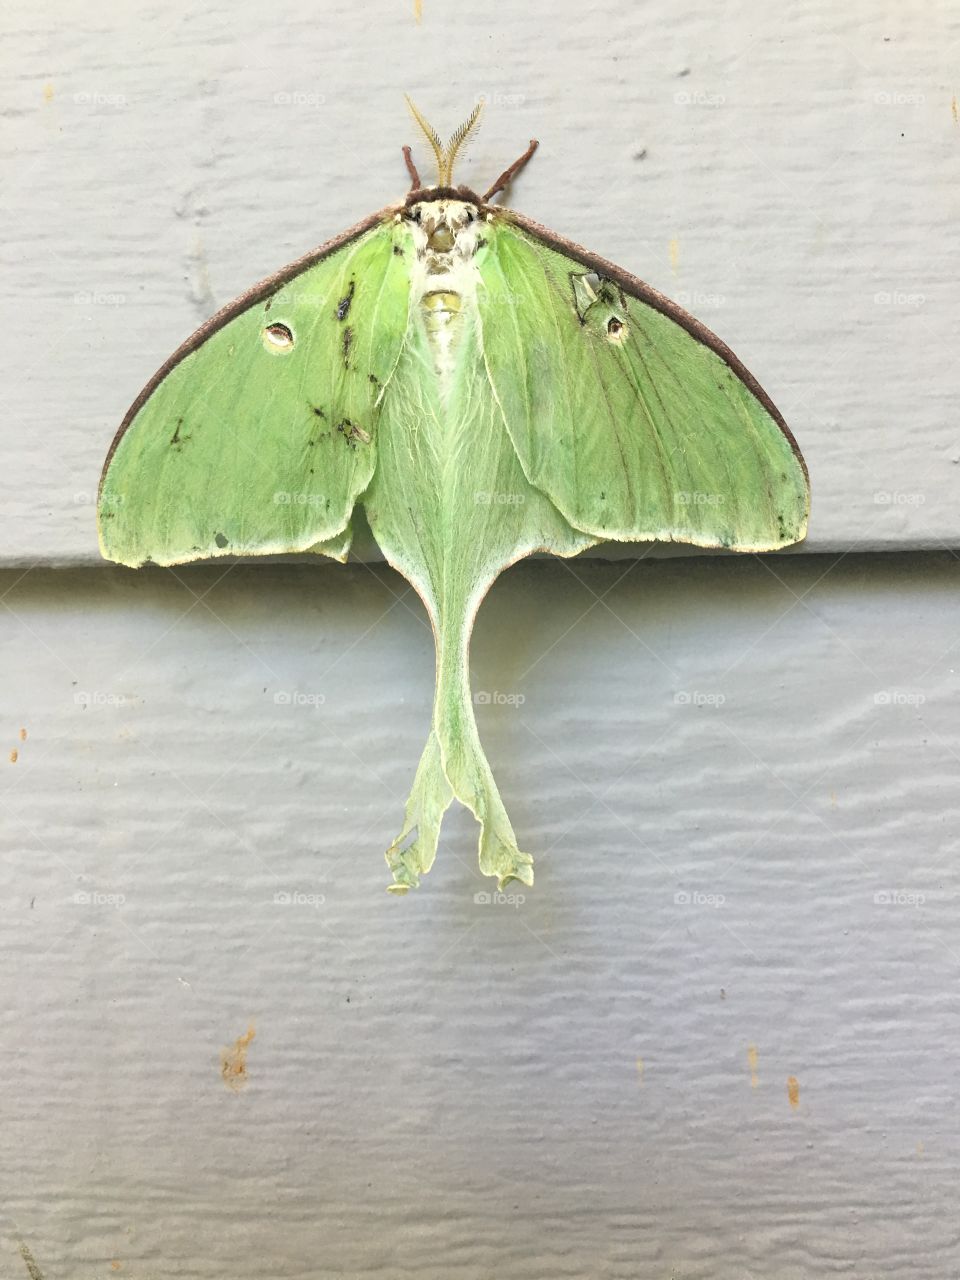 Cool moth / flying bug